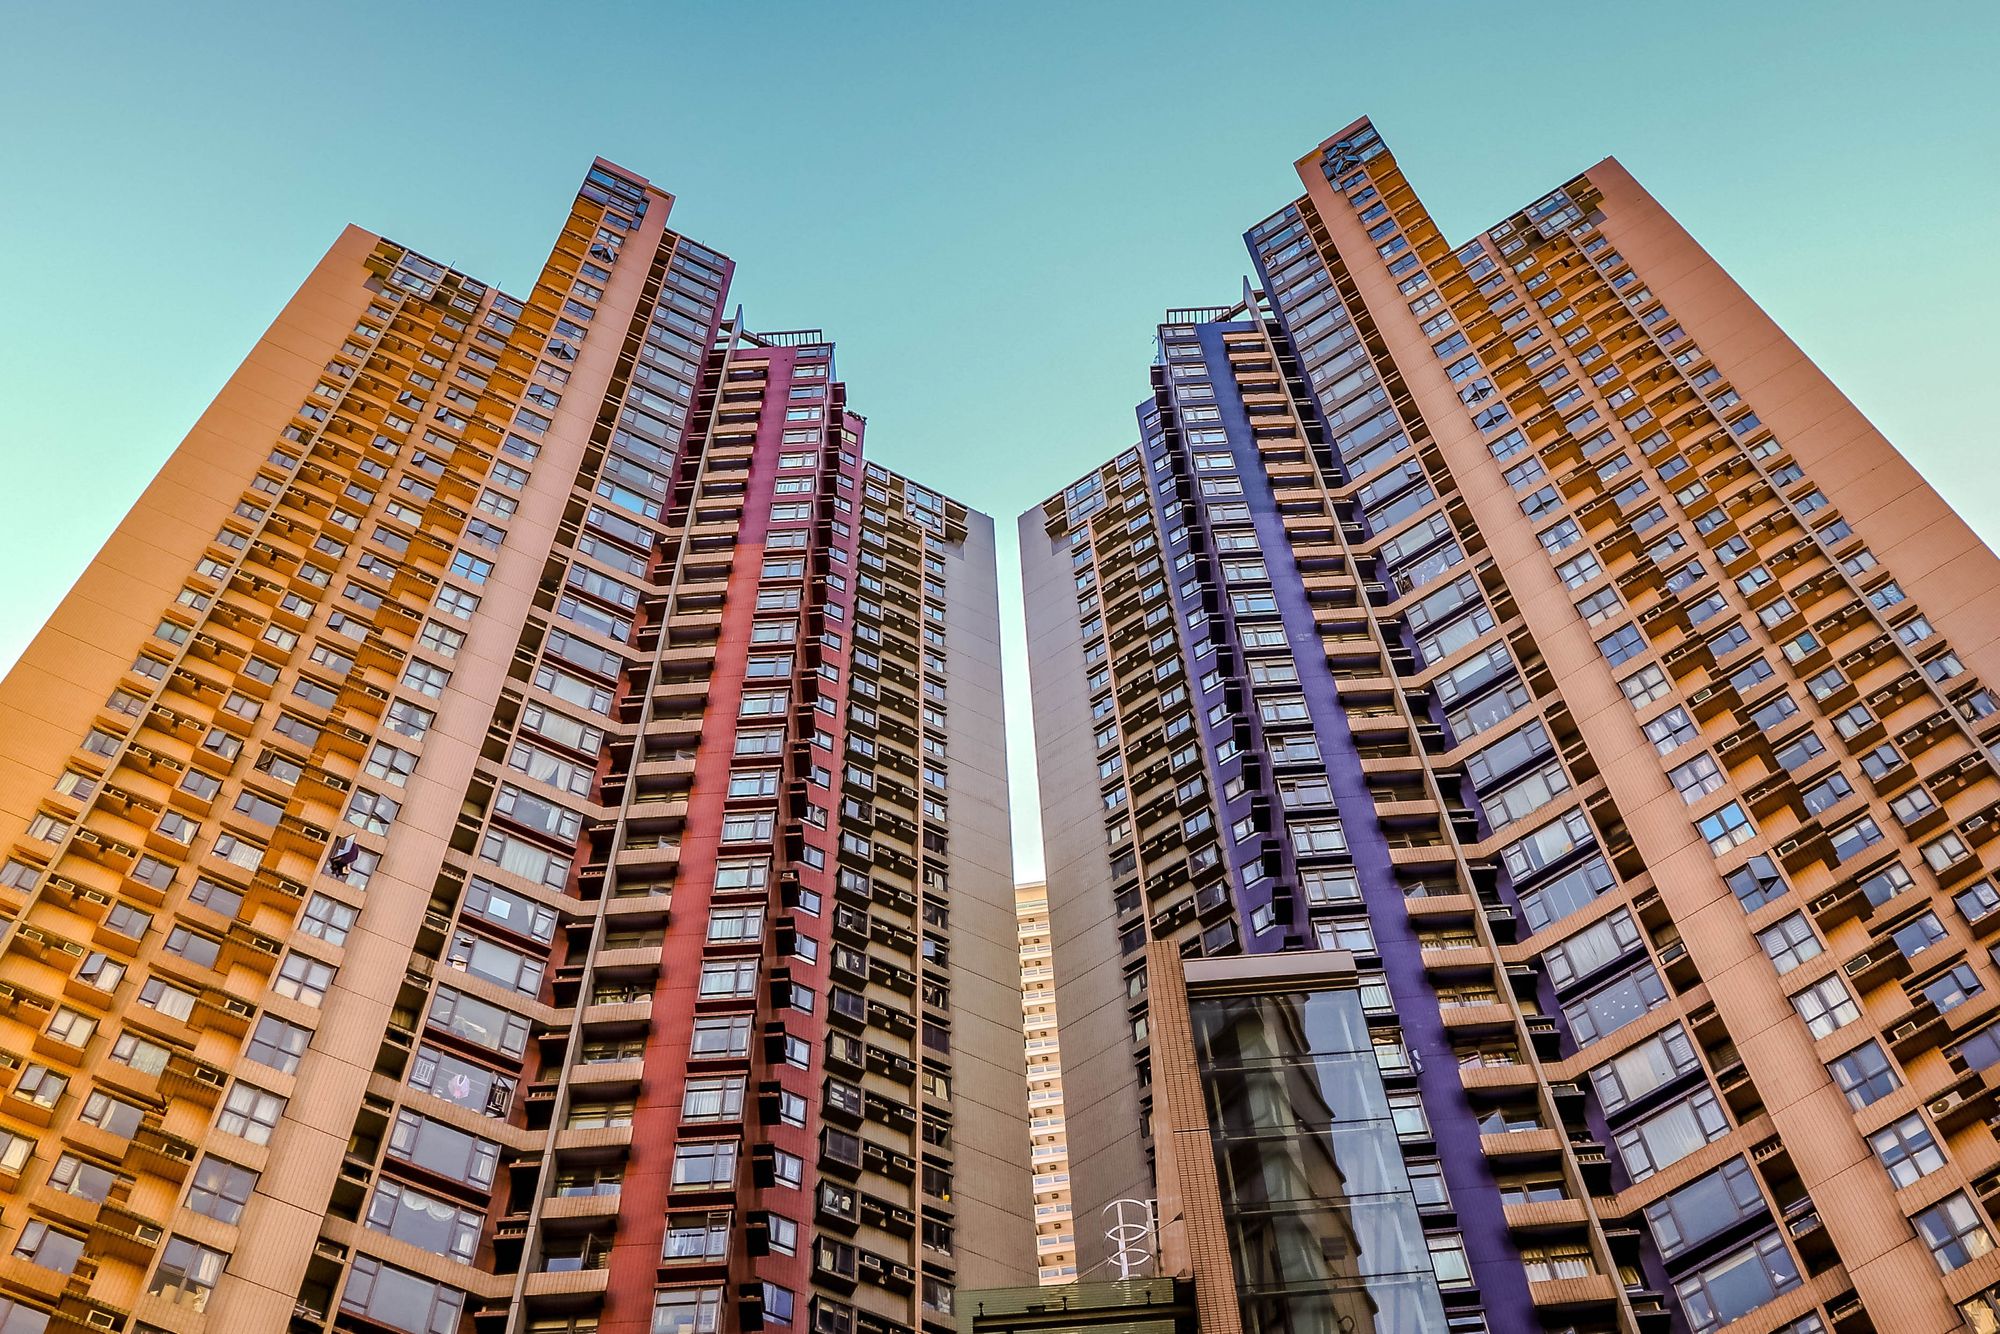 Cautious Optimism in Singapore Real Estate as Sentiment Improves